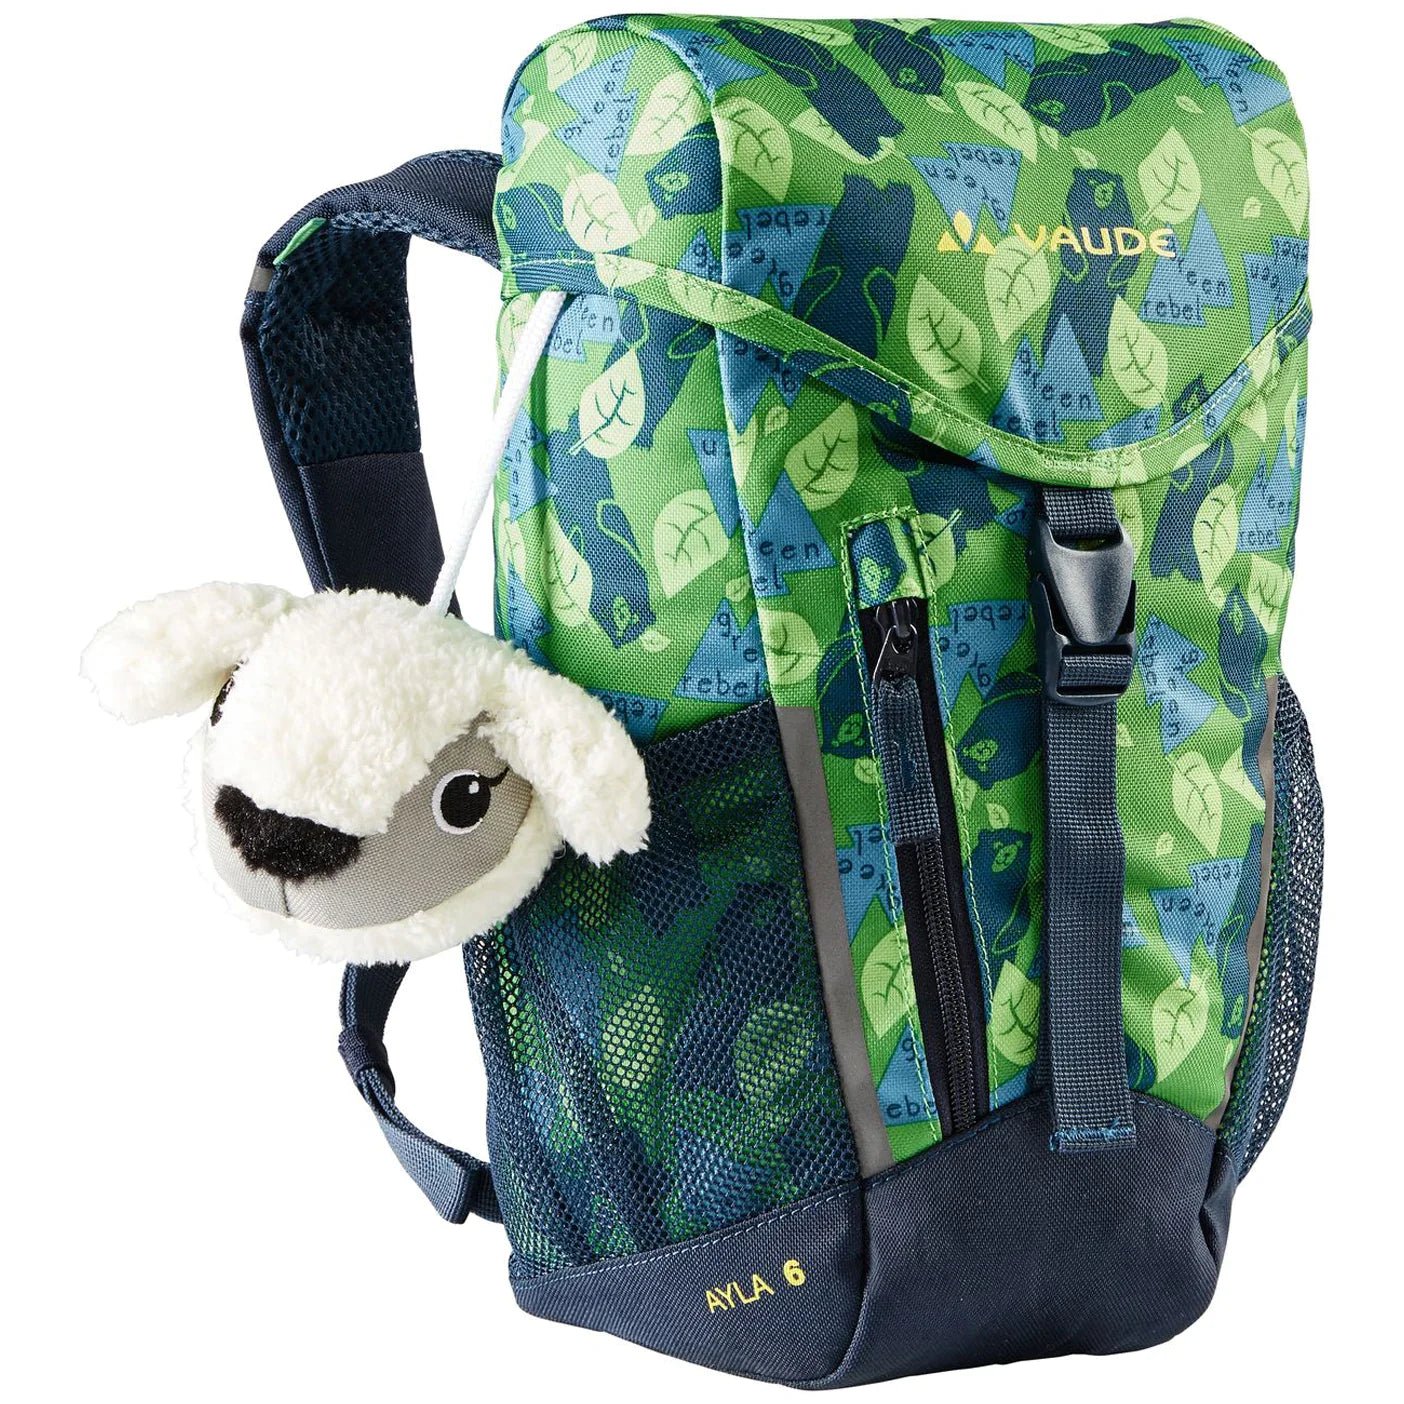 Vaude Family Ayla 6 children's backpack 30 cm - parrot green-eclipse